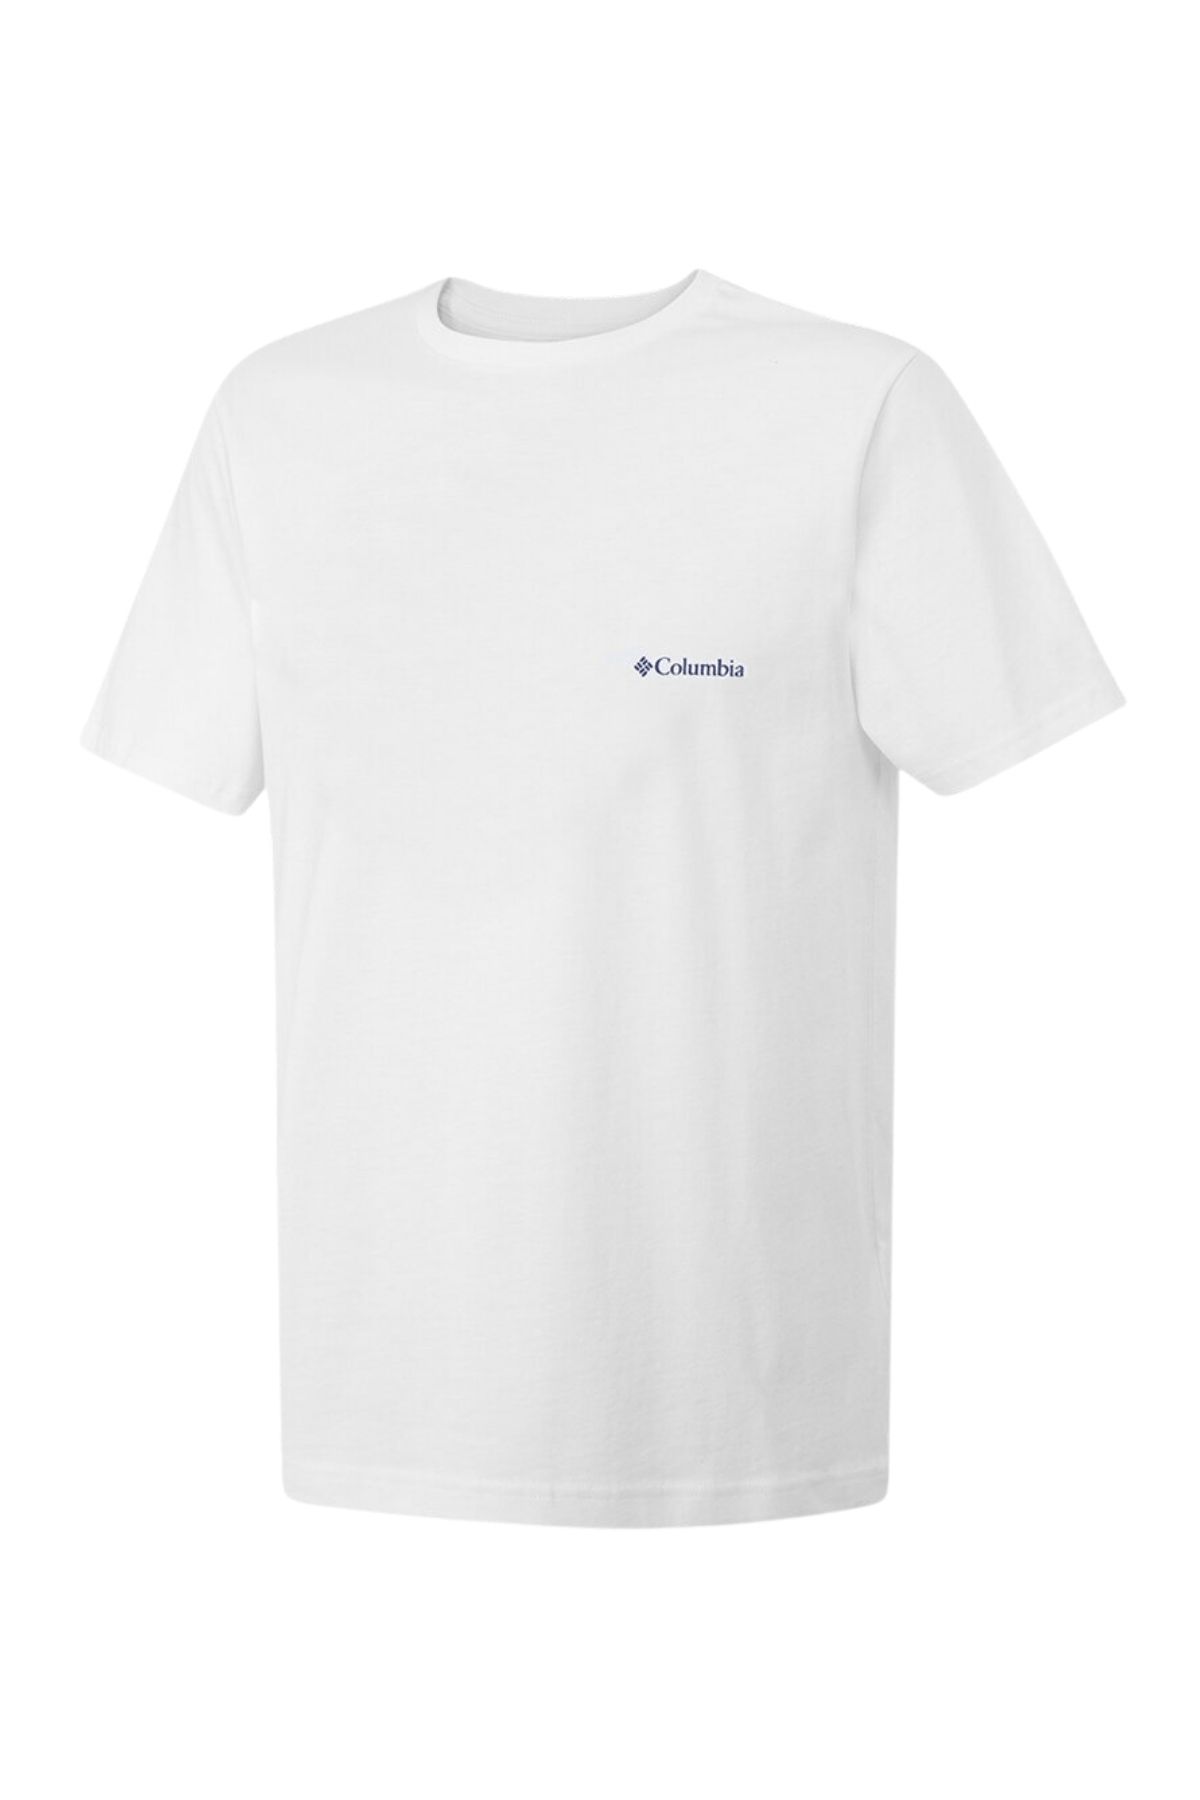 Columbia Erkek Beyaz T-shirt 9110010100-100